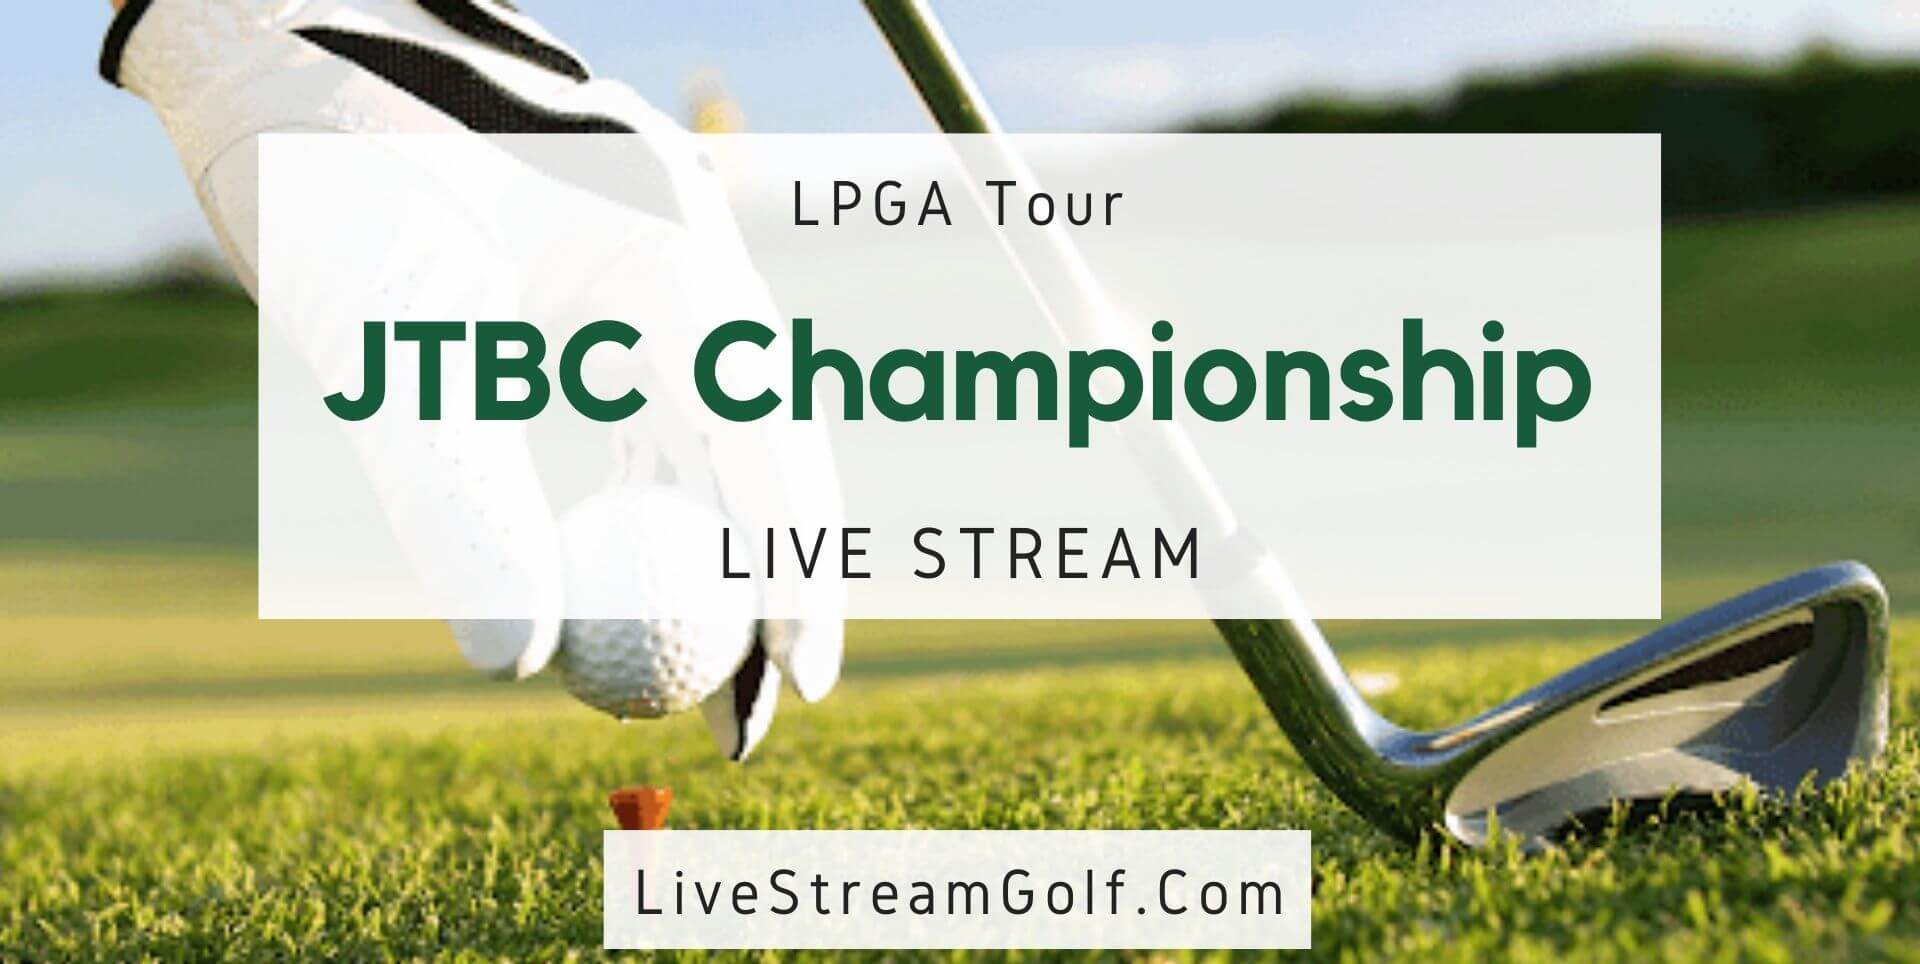 jtbc-championship-lpga-live-stream-palos-verdes